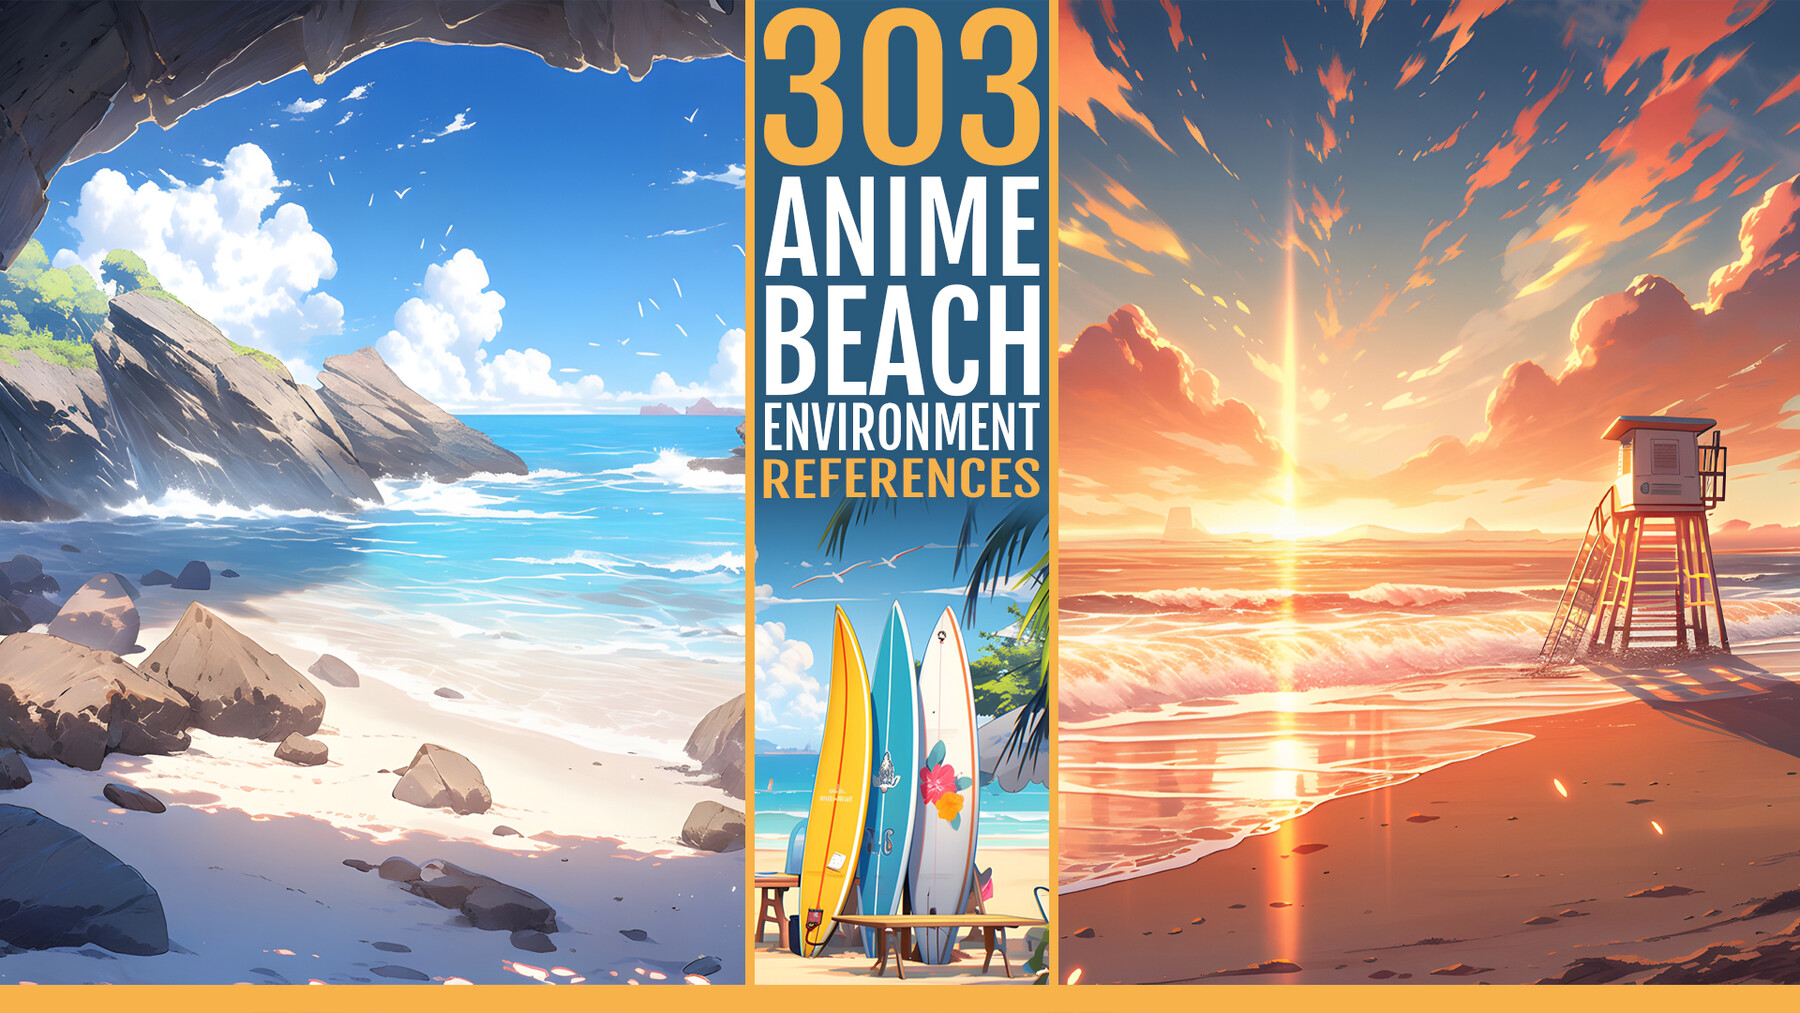 1,663 Anime Girl Beach Images, Stock Photos, 3D objects, & Vectors